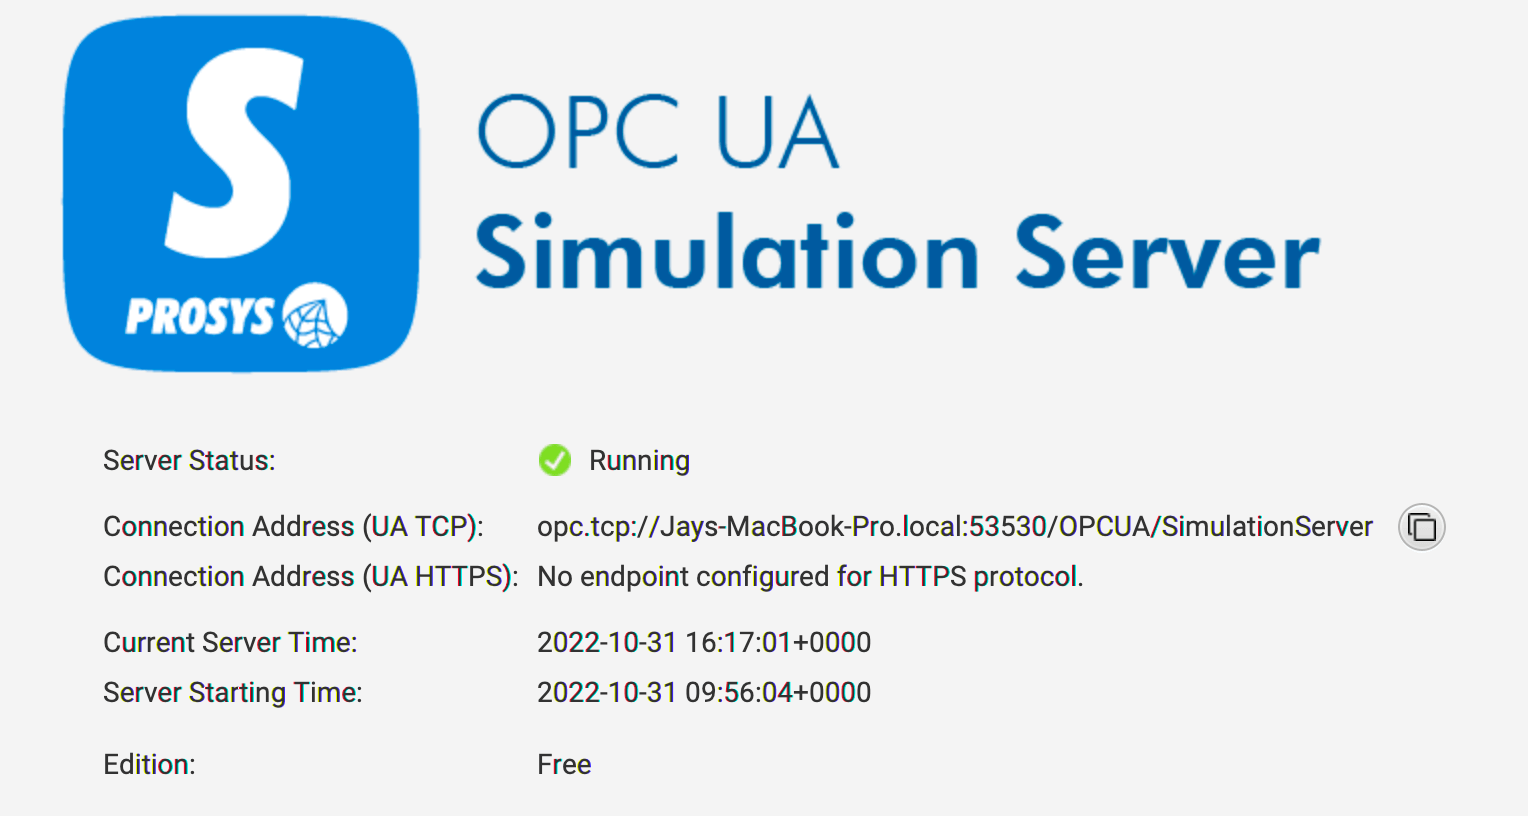 OPC UA similation server